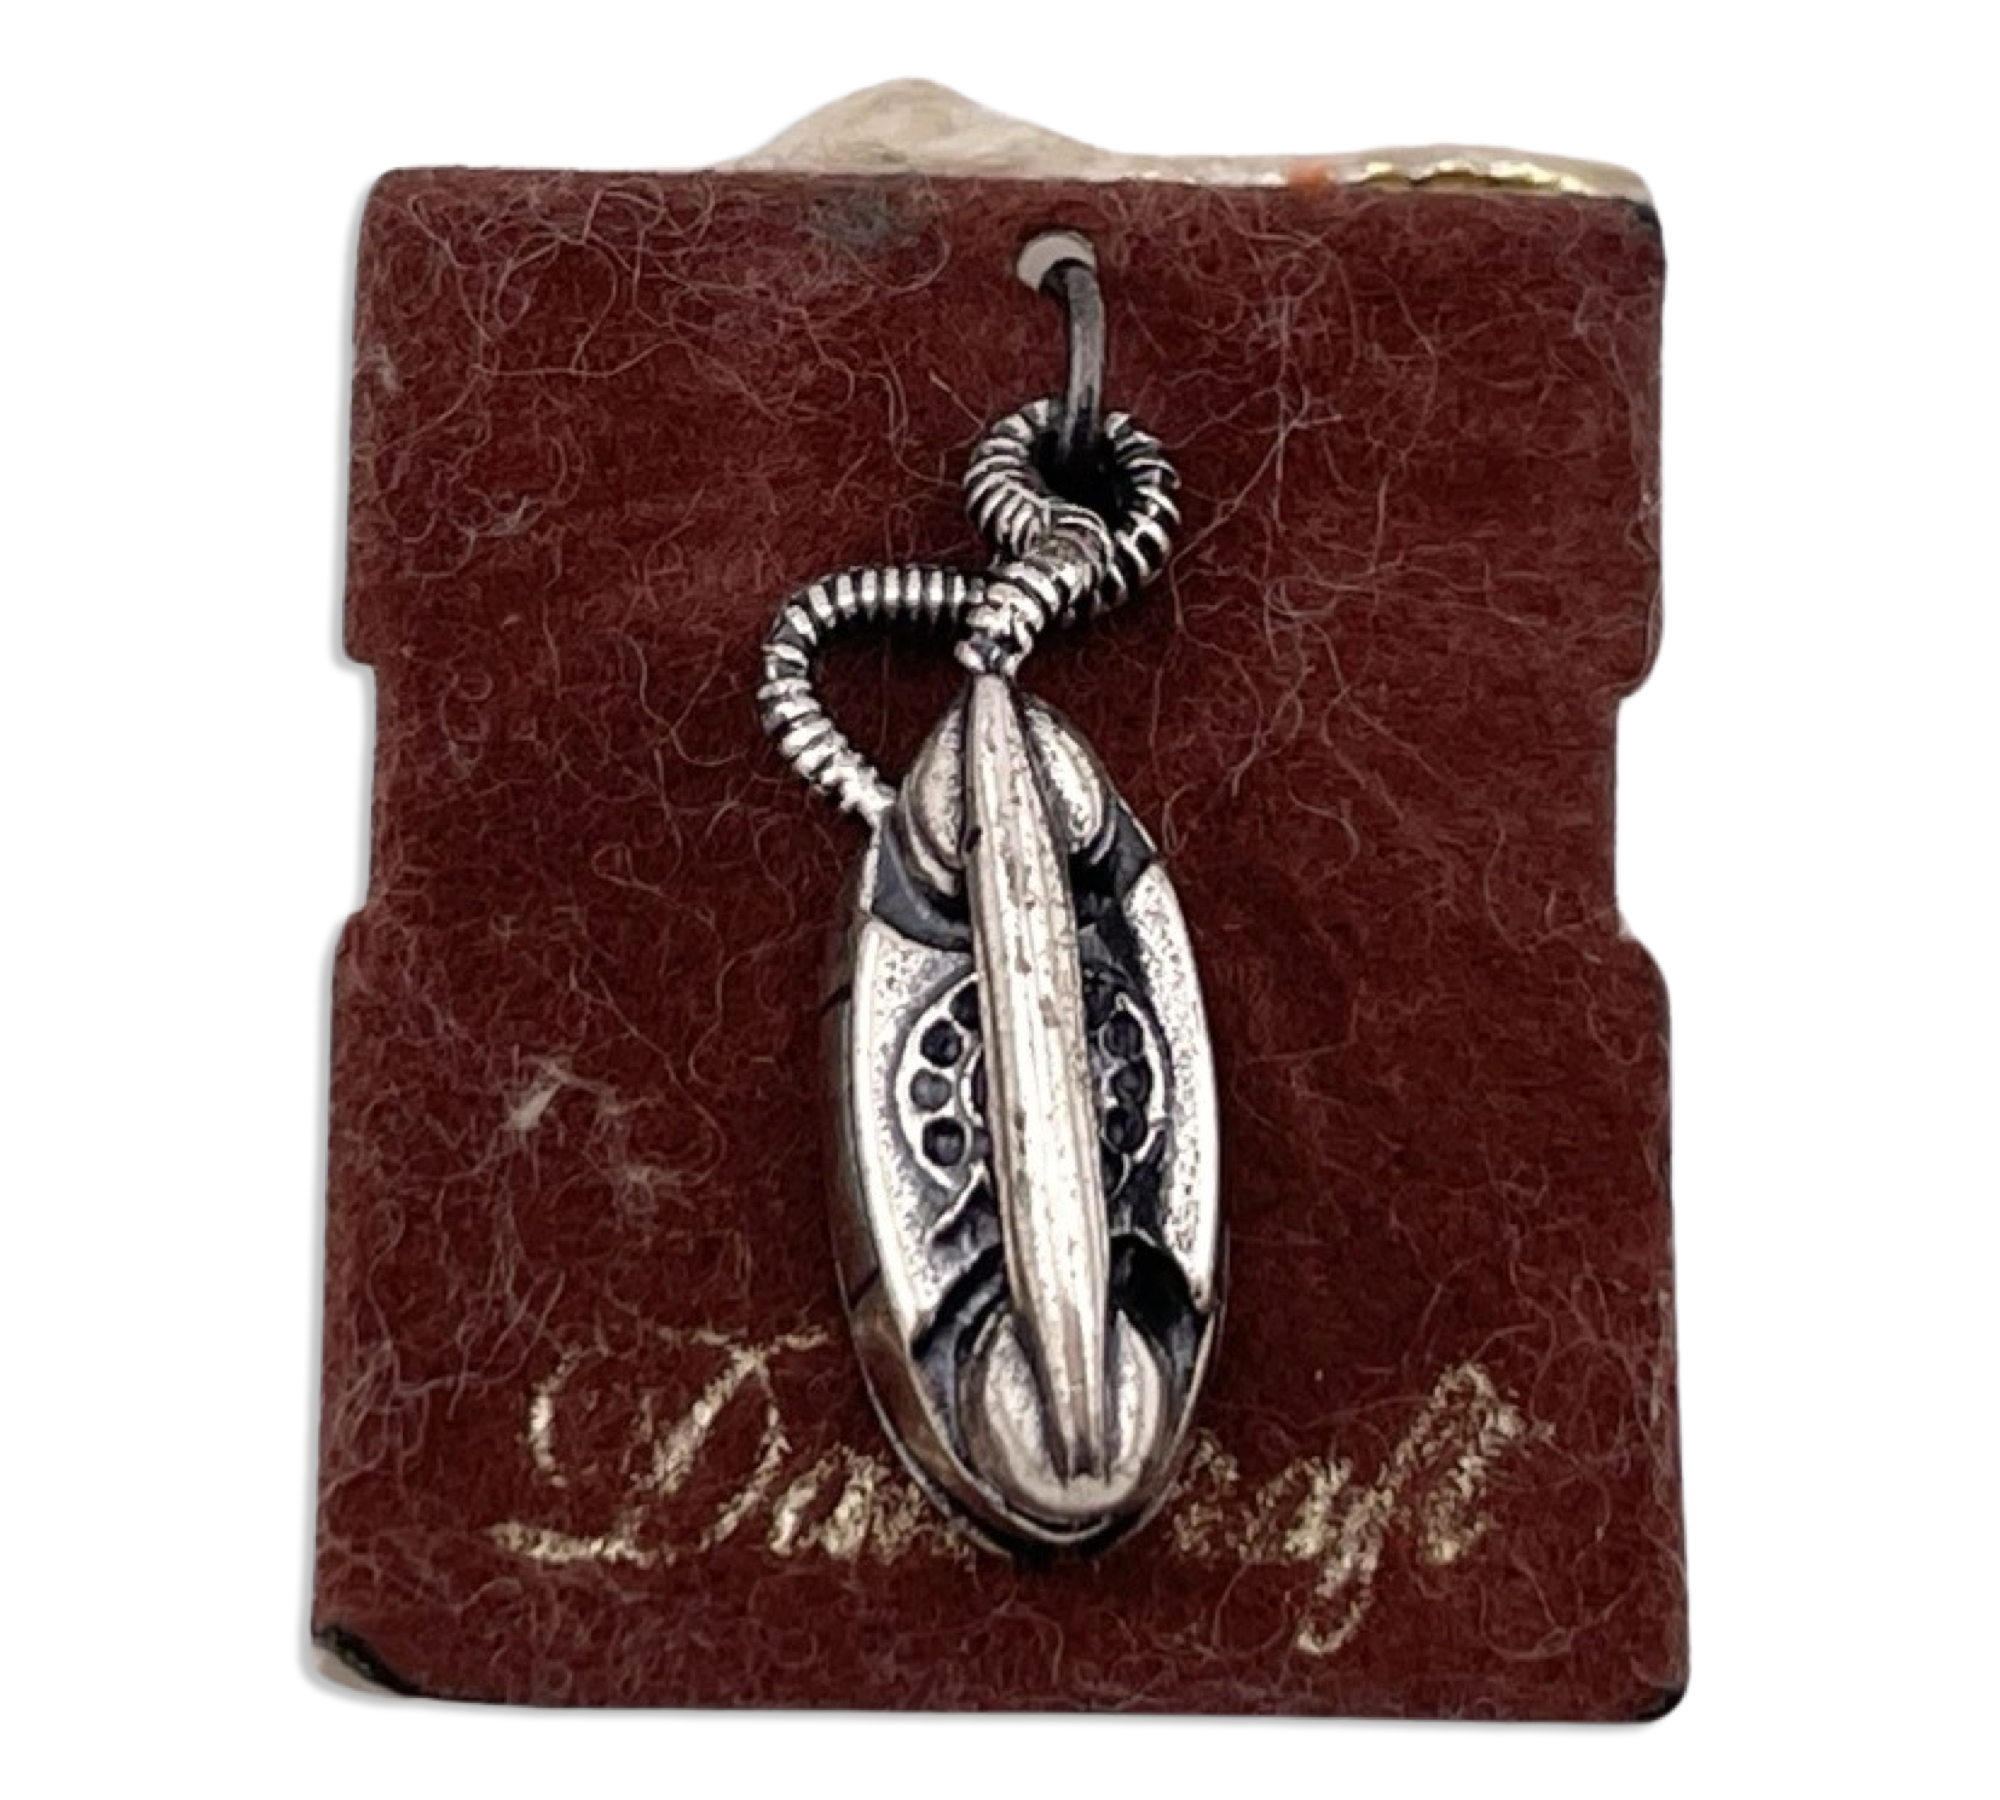 sterling silver NOS Danecraft telephone charm pendant